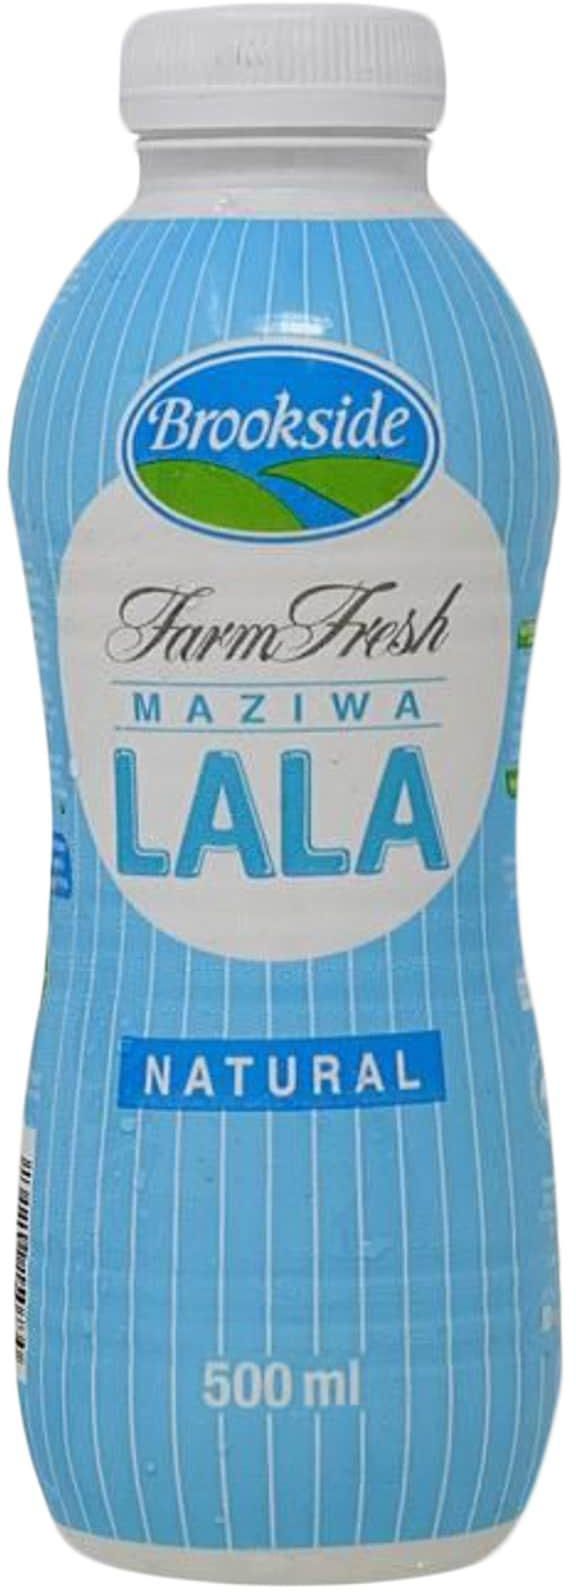 Brookside Farm Fresh Natural Maziwa Lala 1L